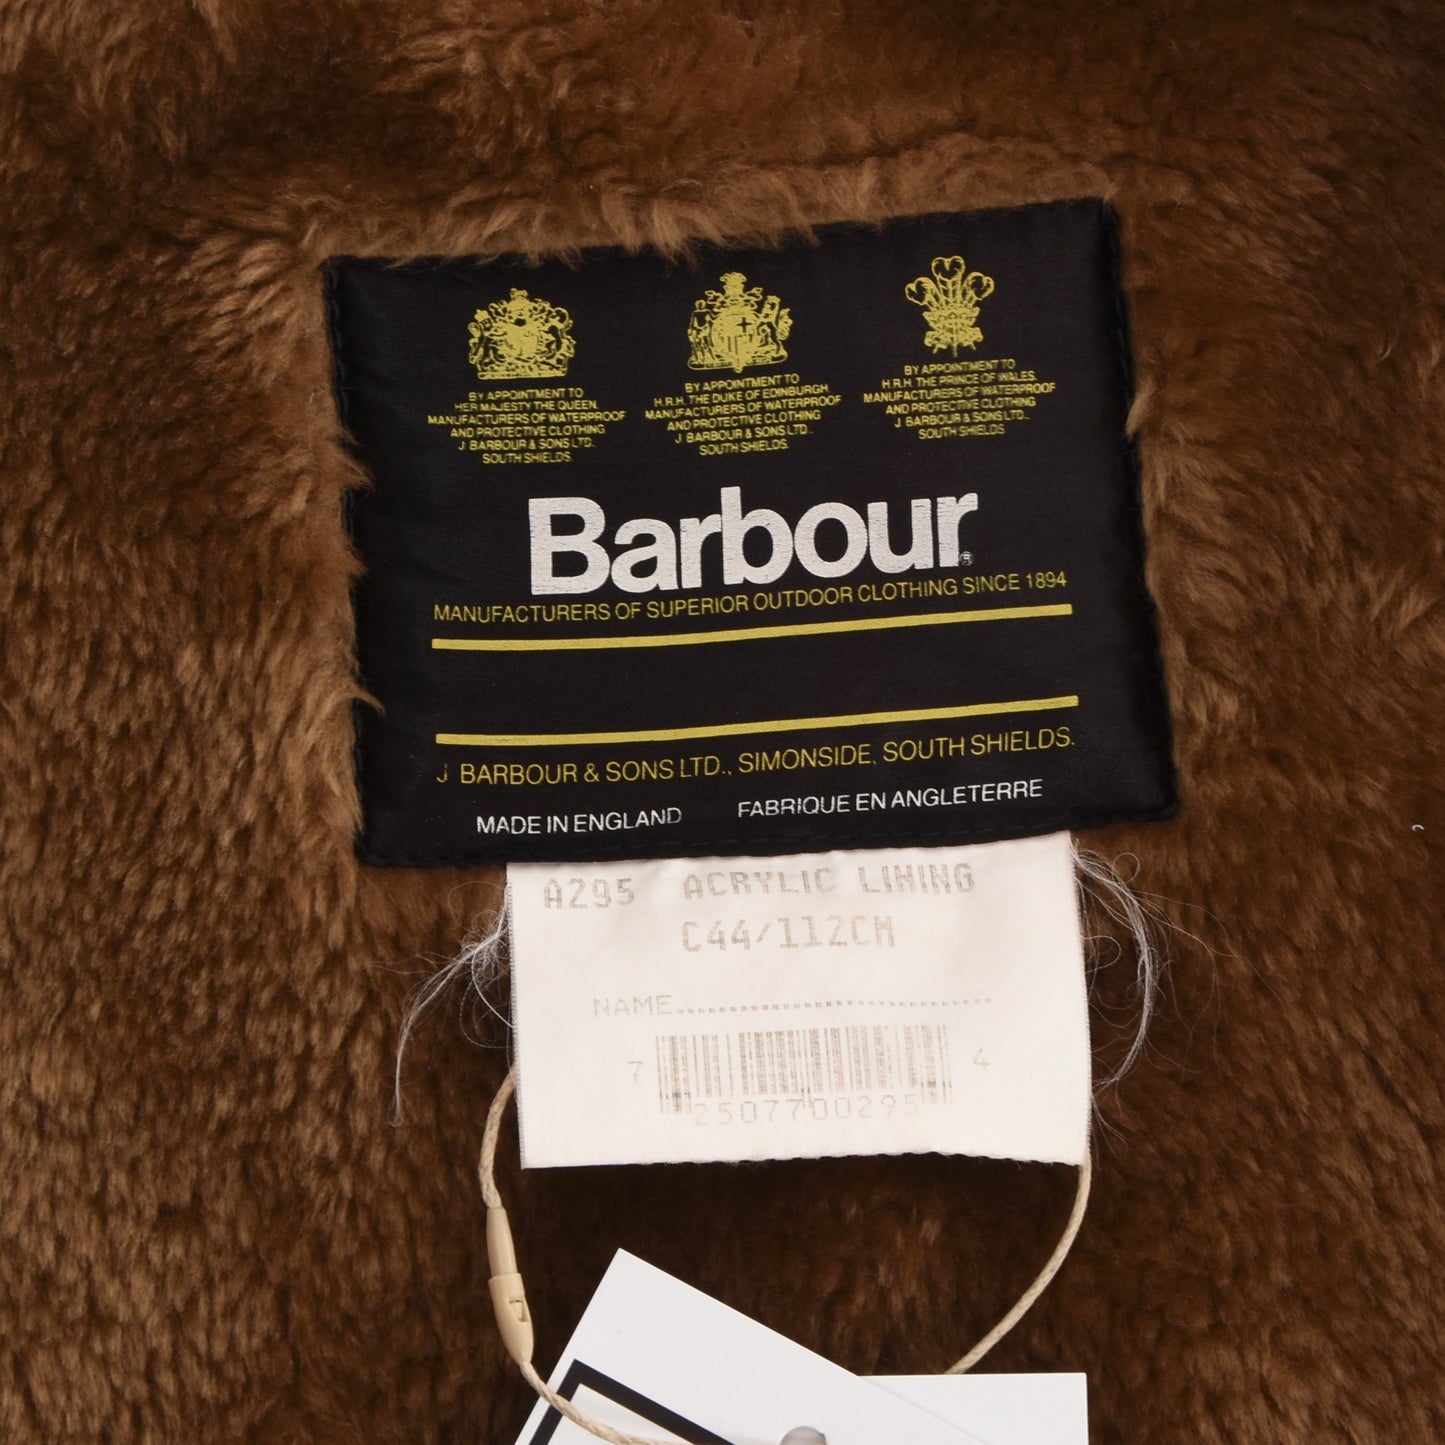 Barbour A295 Acrylfutter Größe C44/112cm - Braun